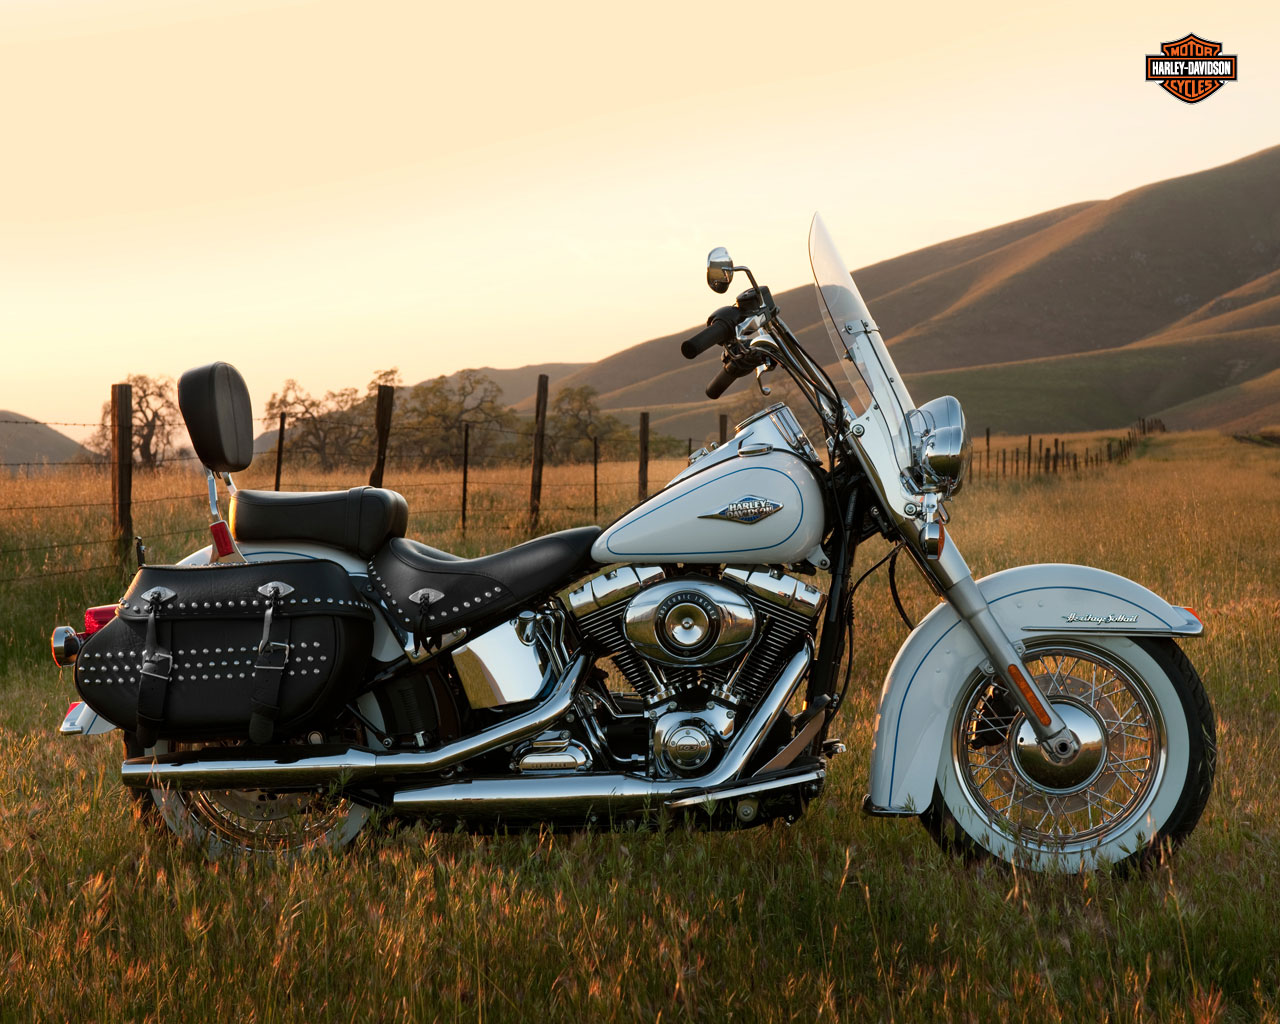 2012 Harley Davidson Flstc Heritage Softail Classic Review